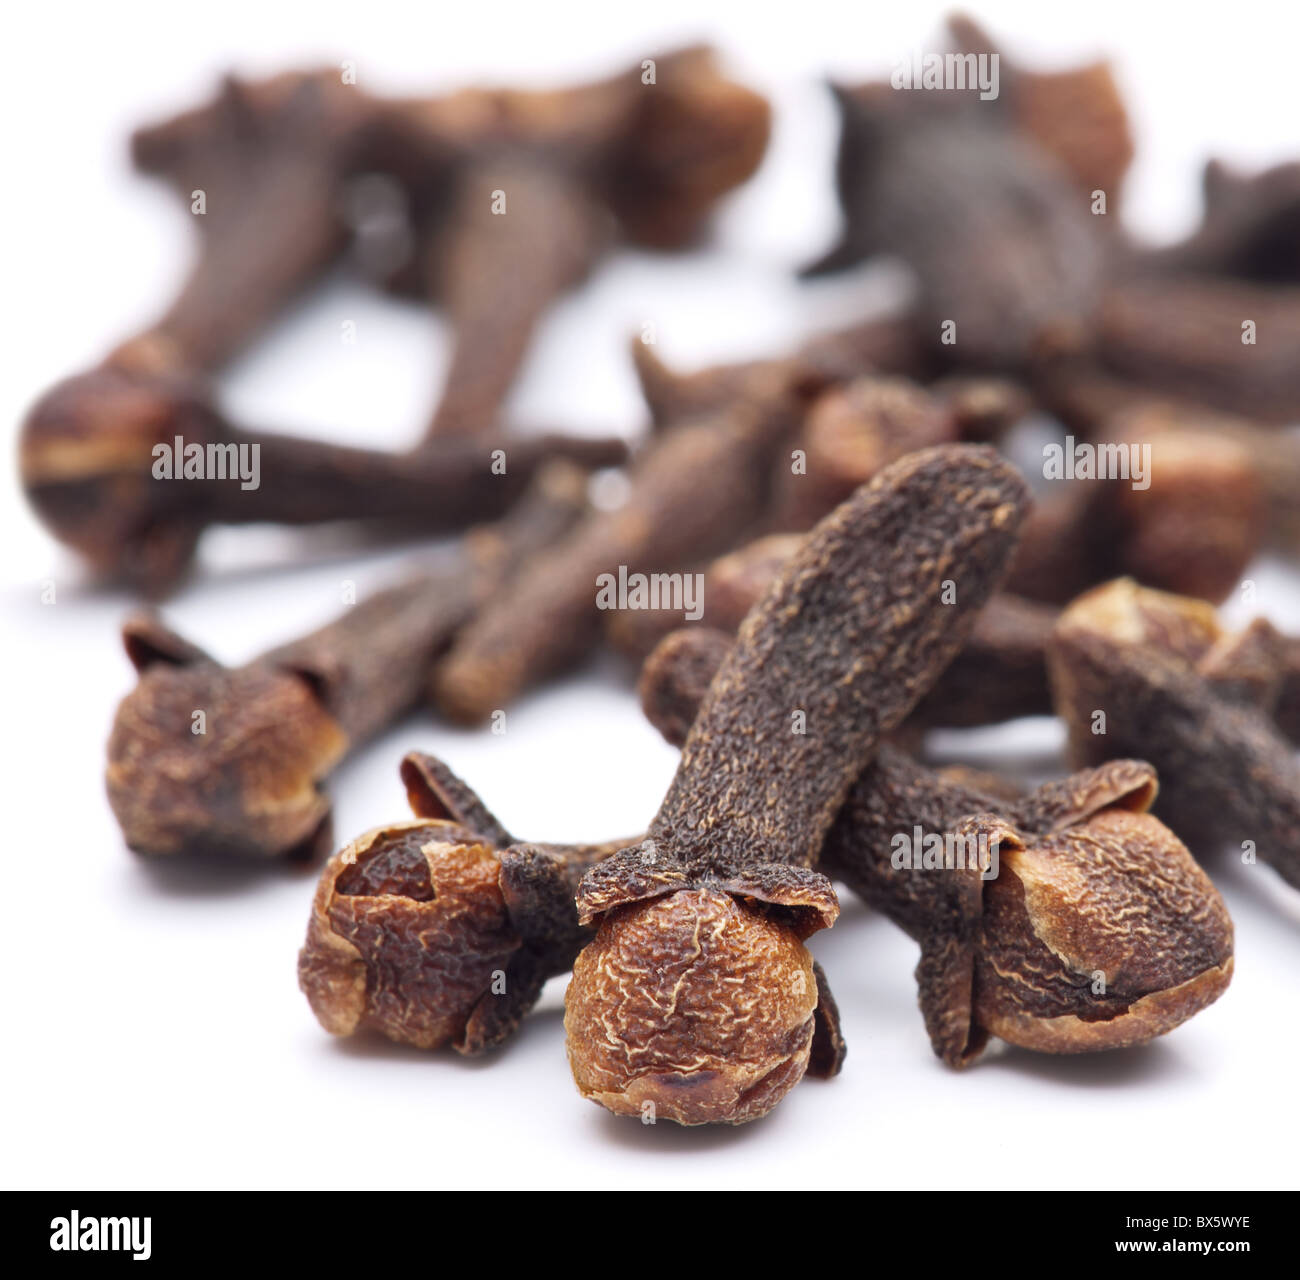 Spice cloves on white background Stock Photo